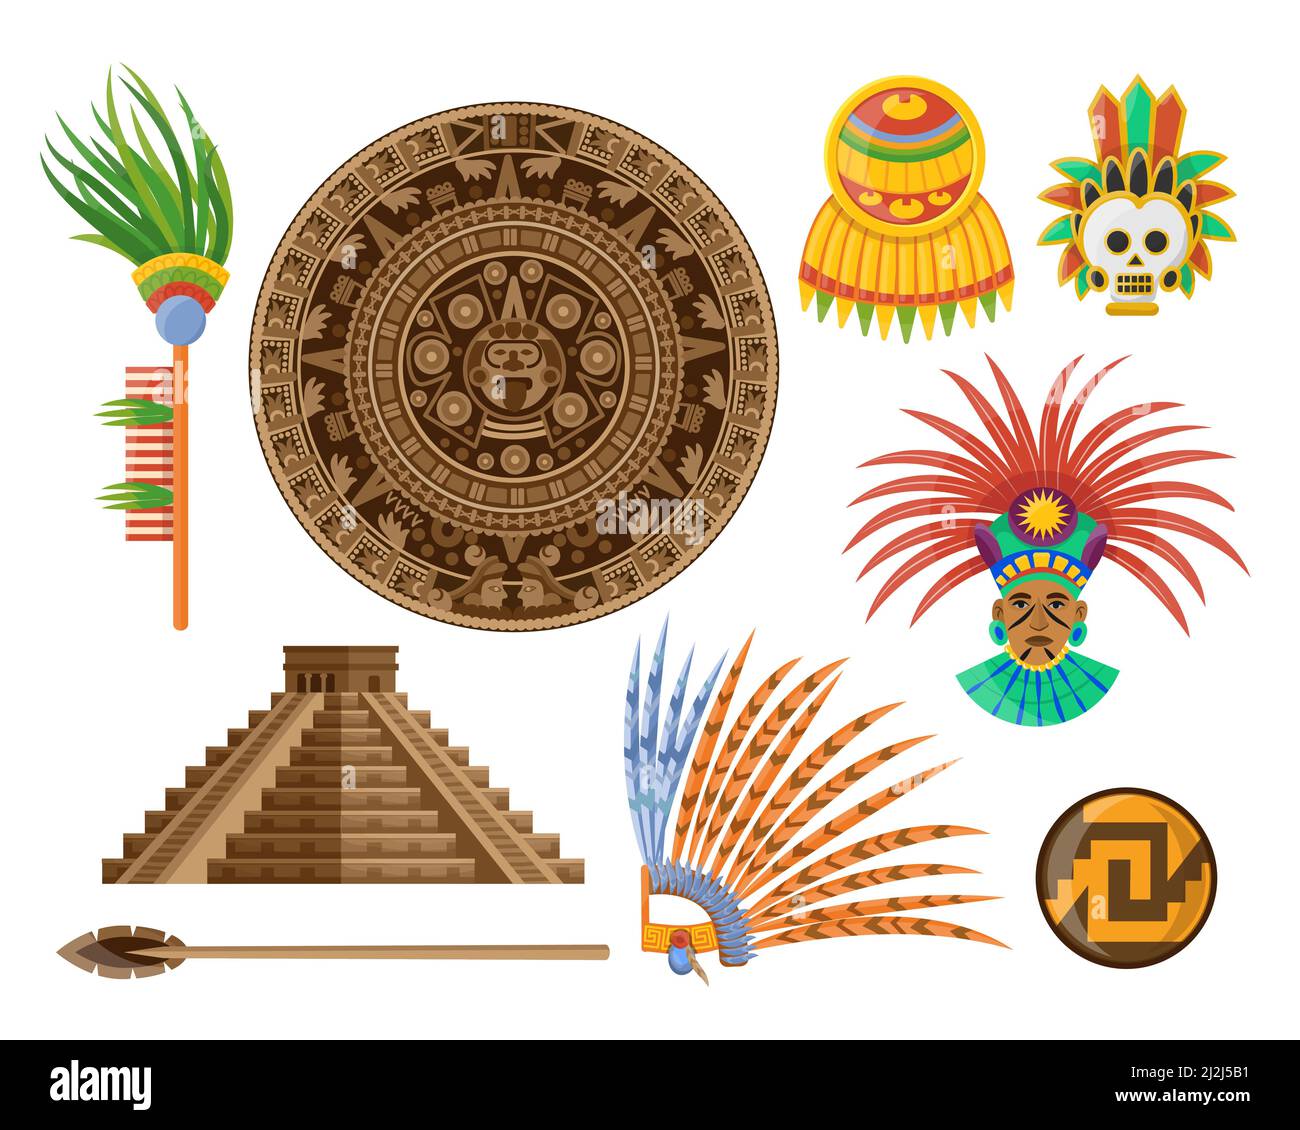 Guerrero aguila azteca fotografías e imágenes de alta resolución - Alamy